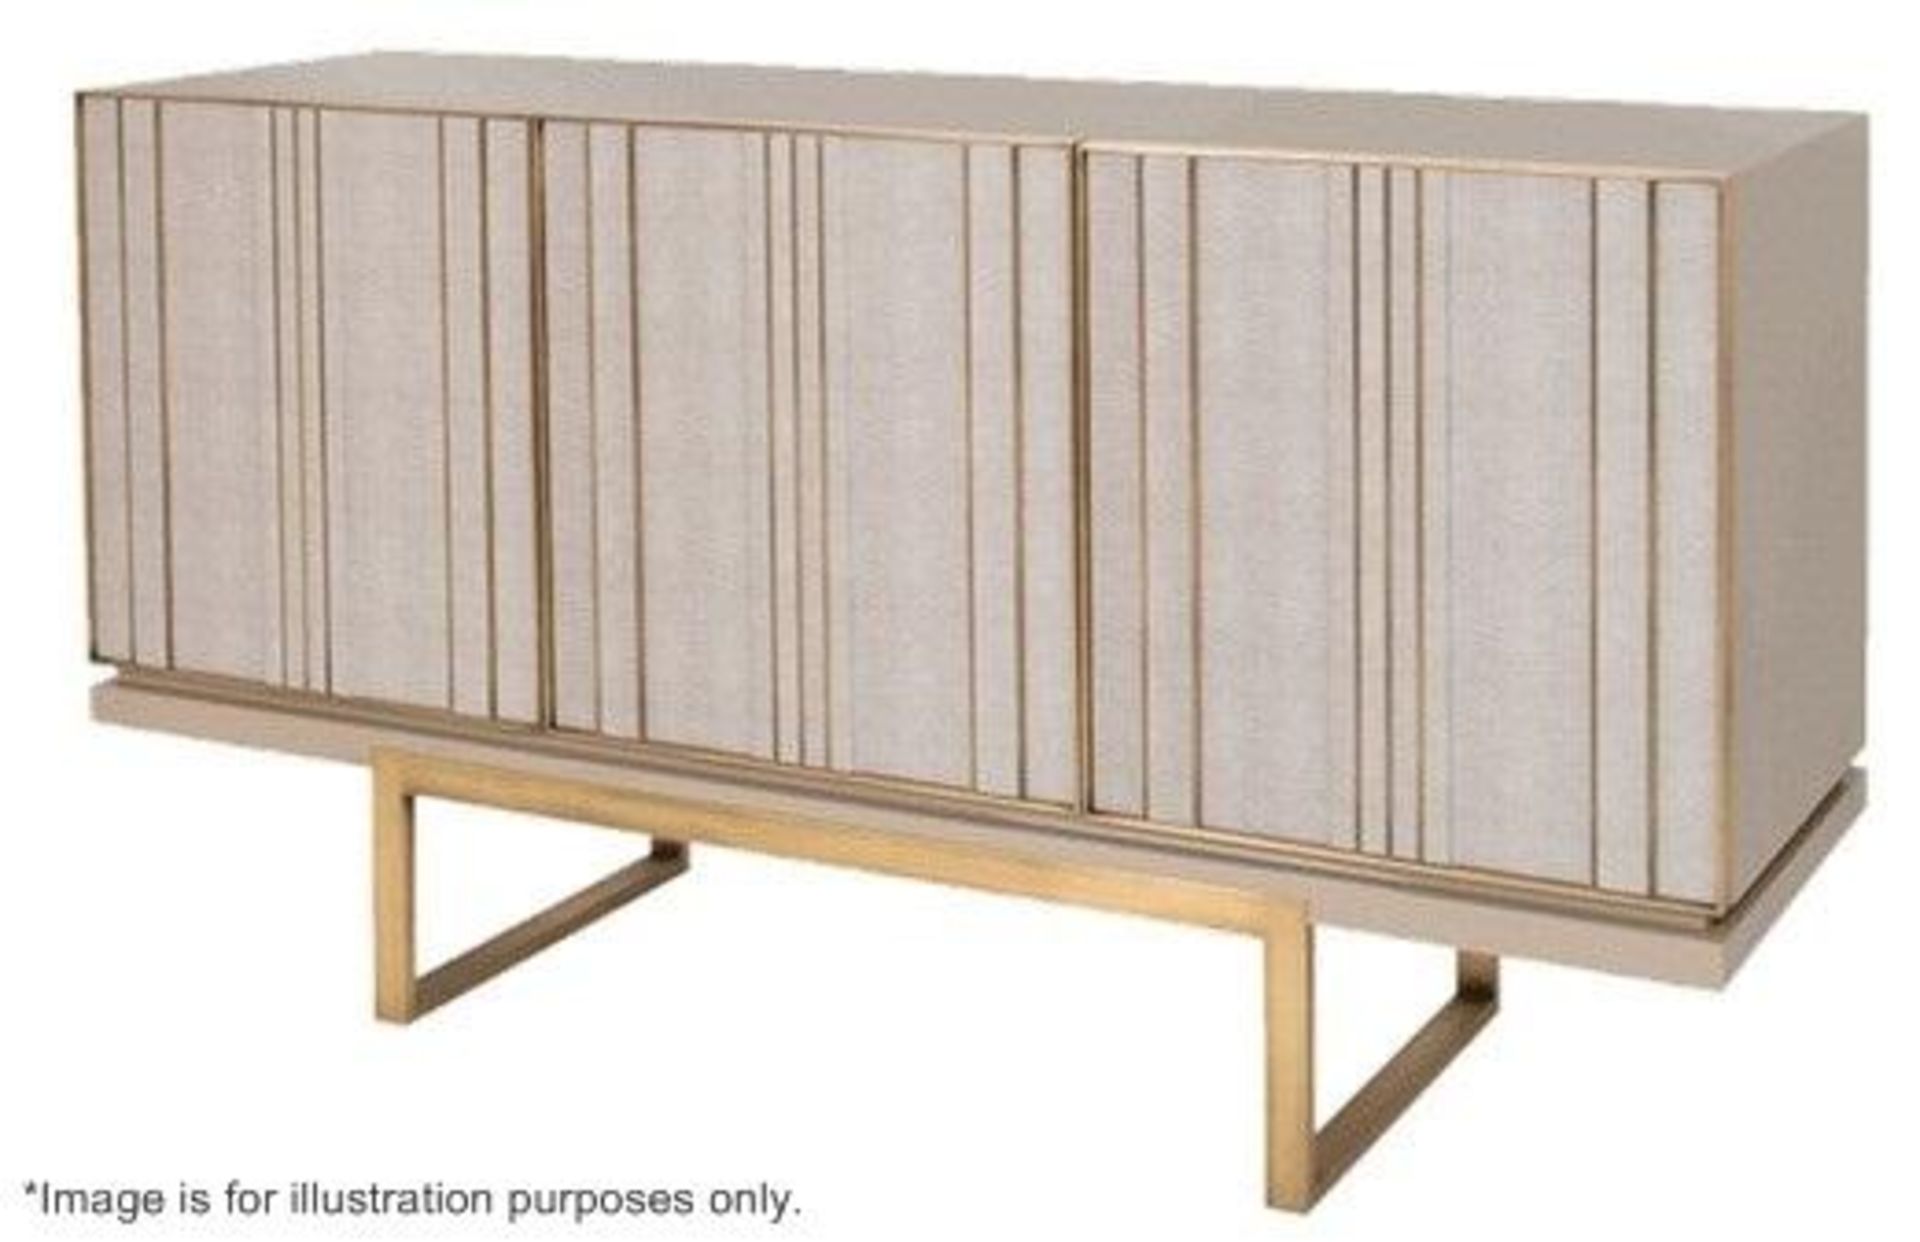 1 x FRATO 'Ascot' Designer Sideboard - Dimensions: W170 x D50 x H90cm - Original Price £3,249 - Ref: